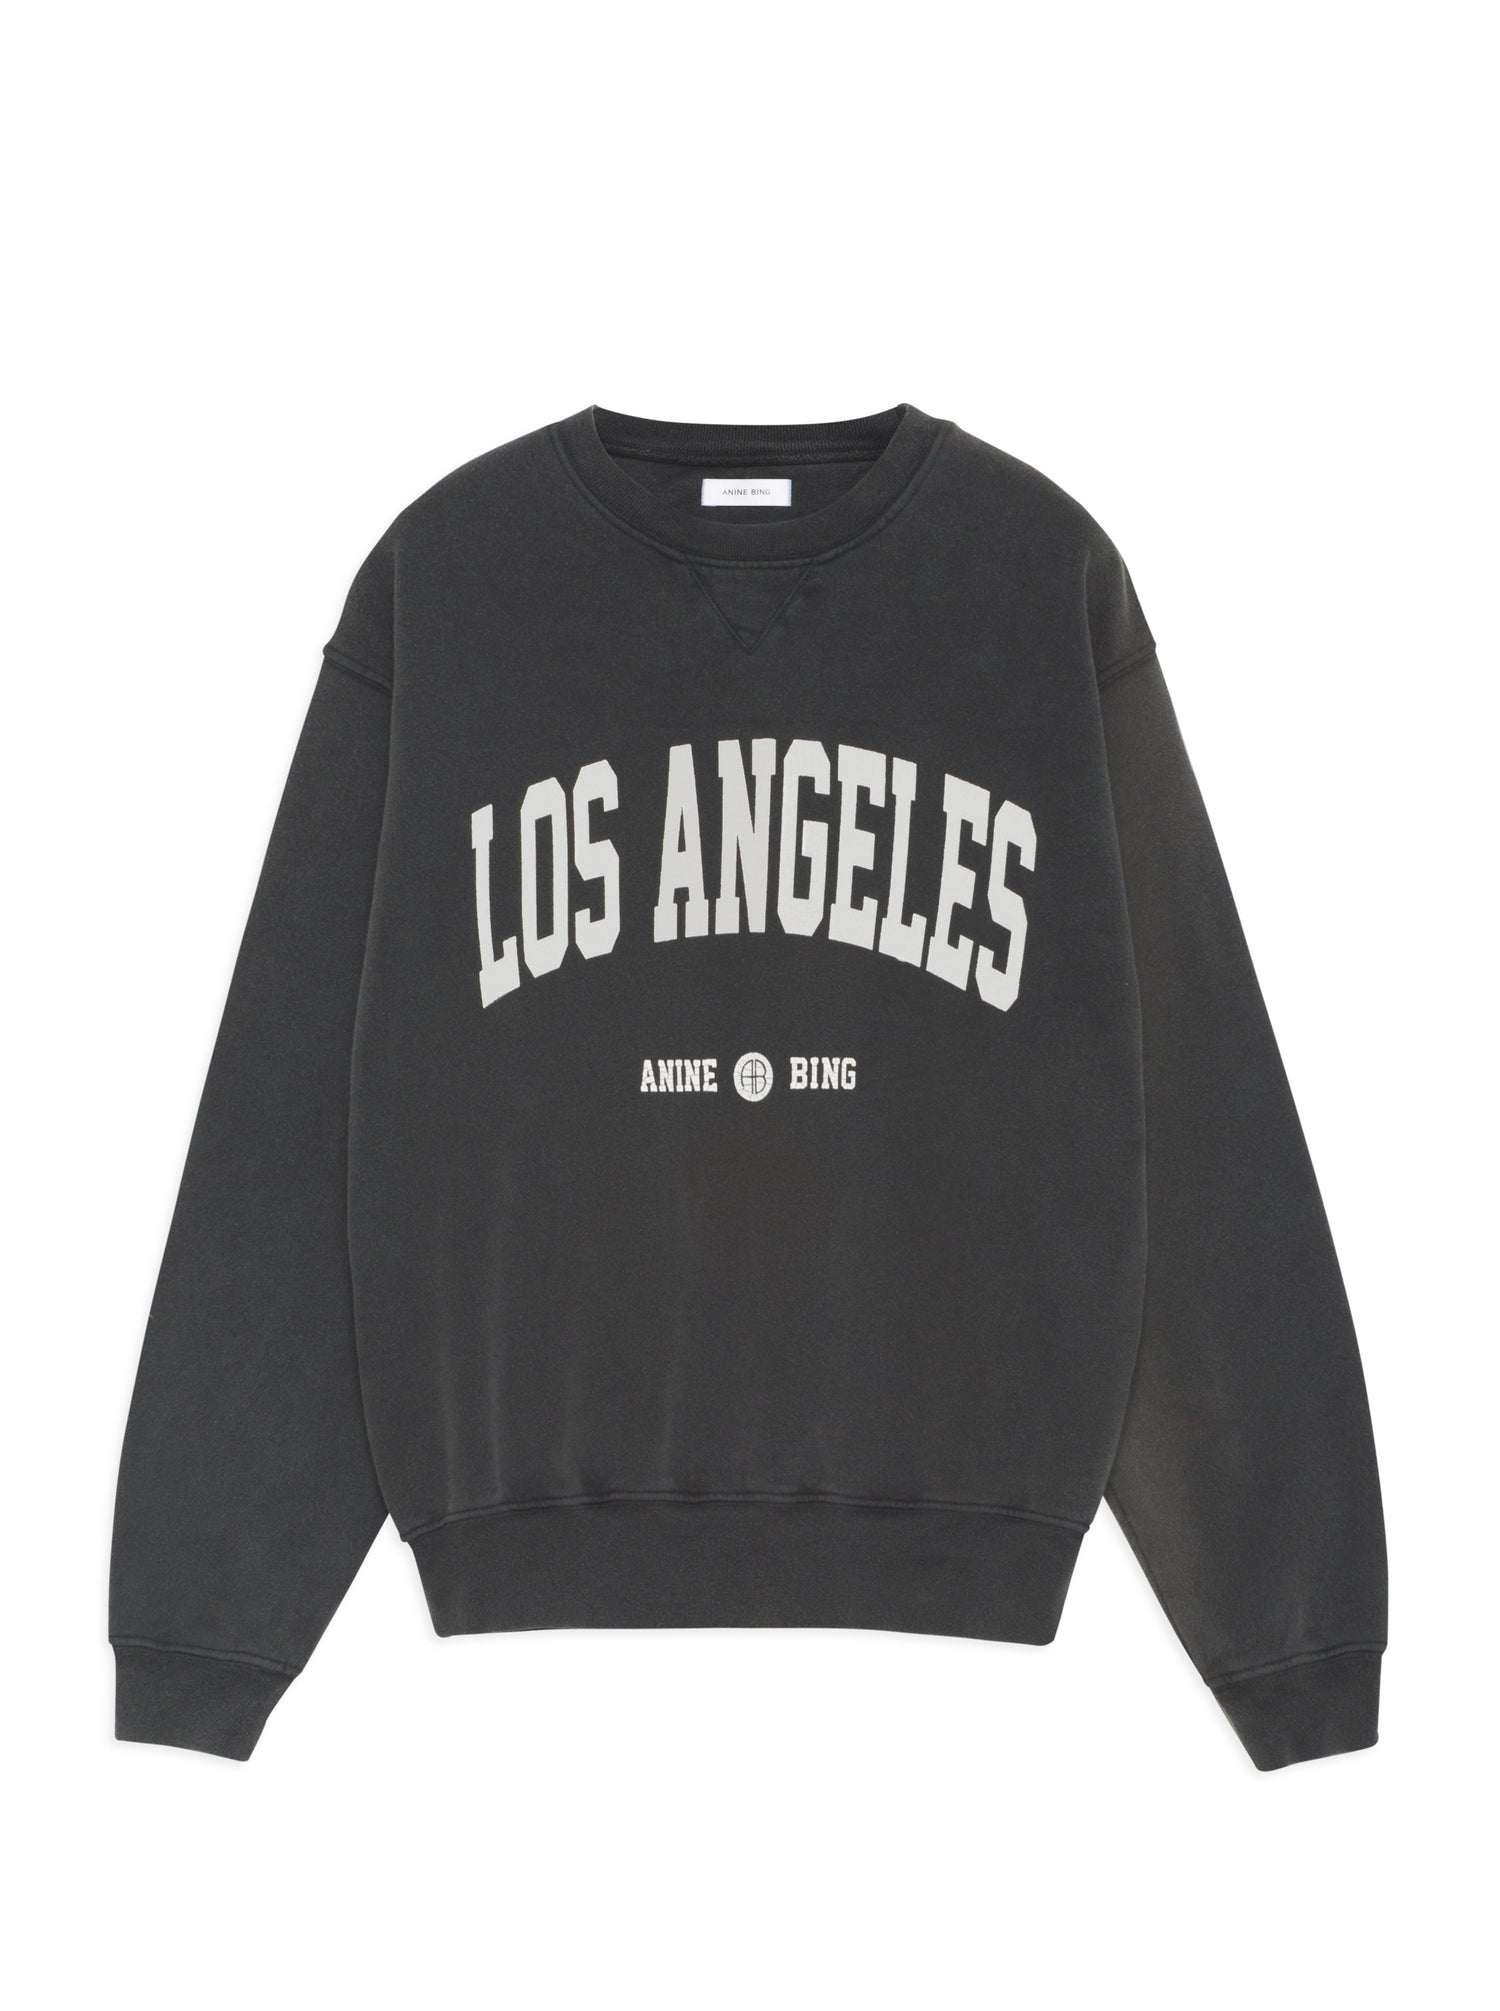 Ramona sweatshirt Los Angeles, washed black